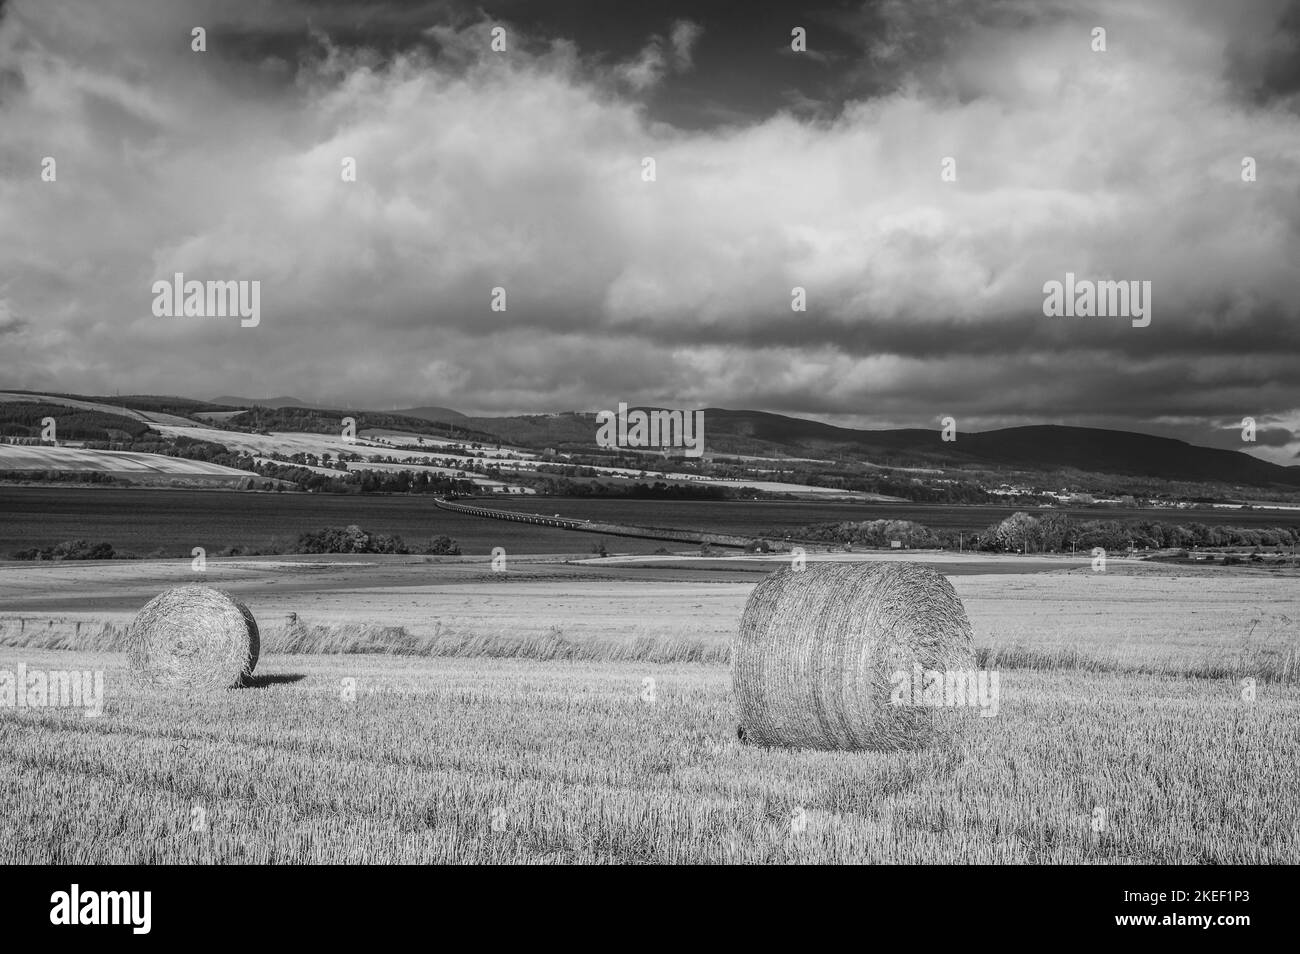 Dingwall scotland Black and White Stock Photos & Images - Alamy